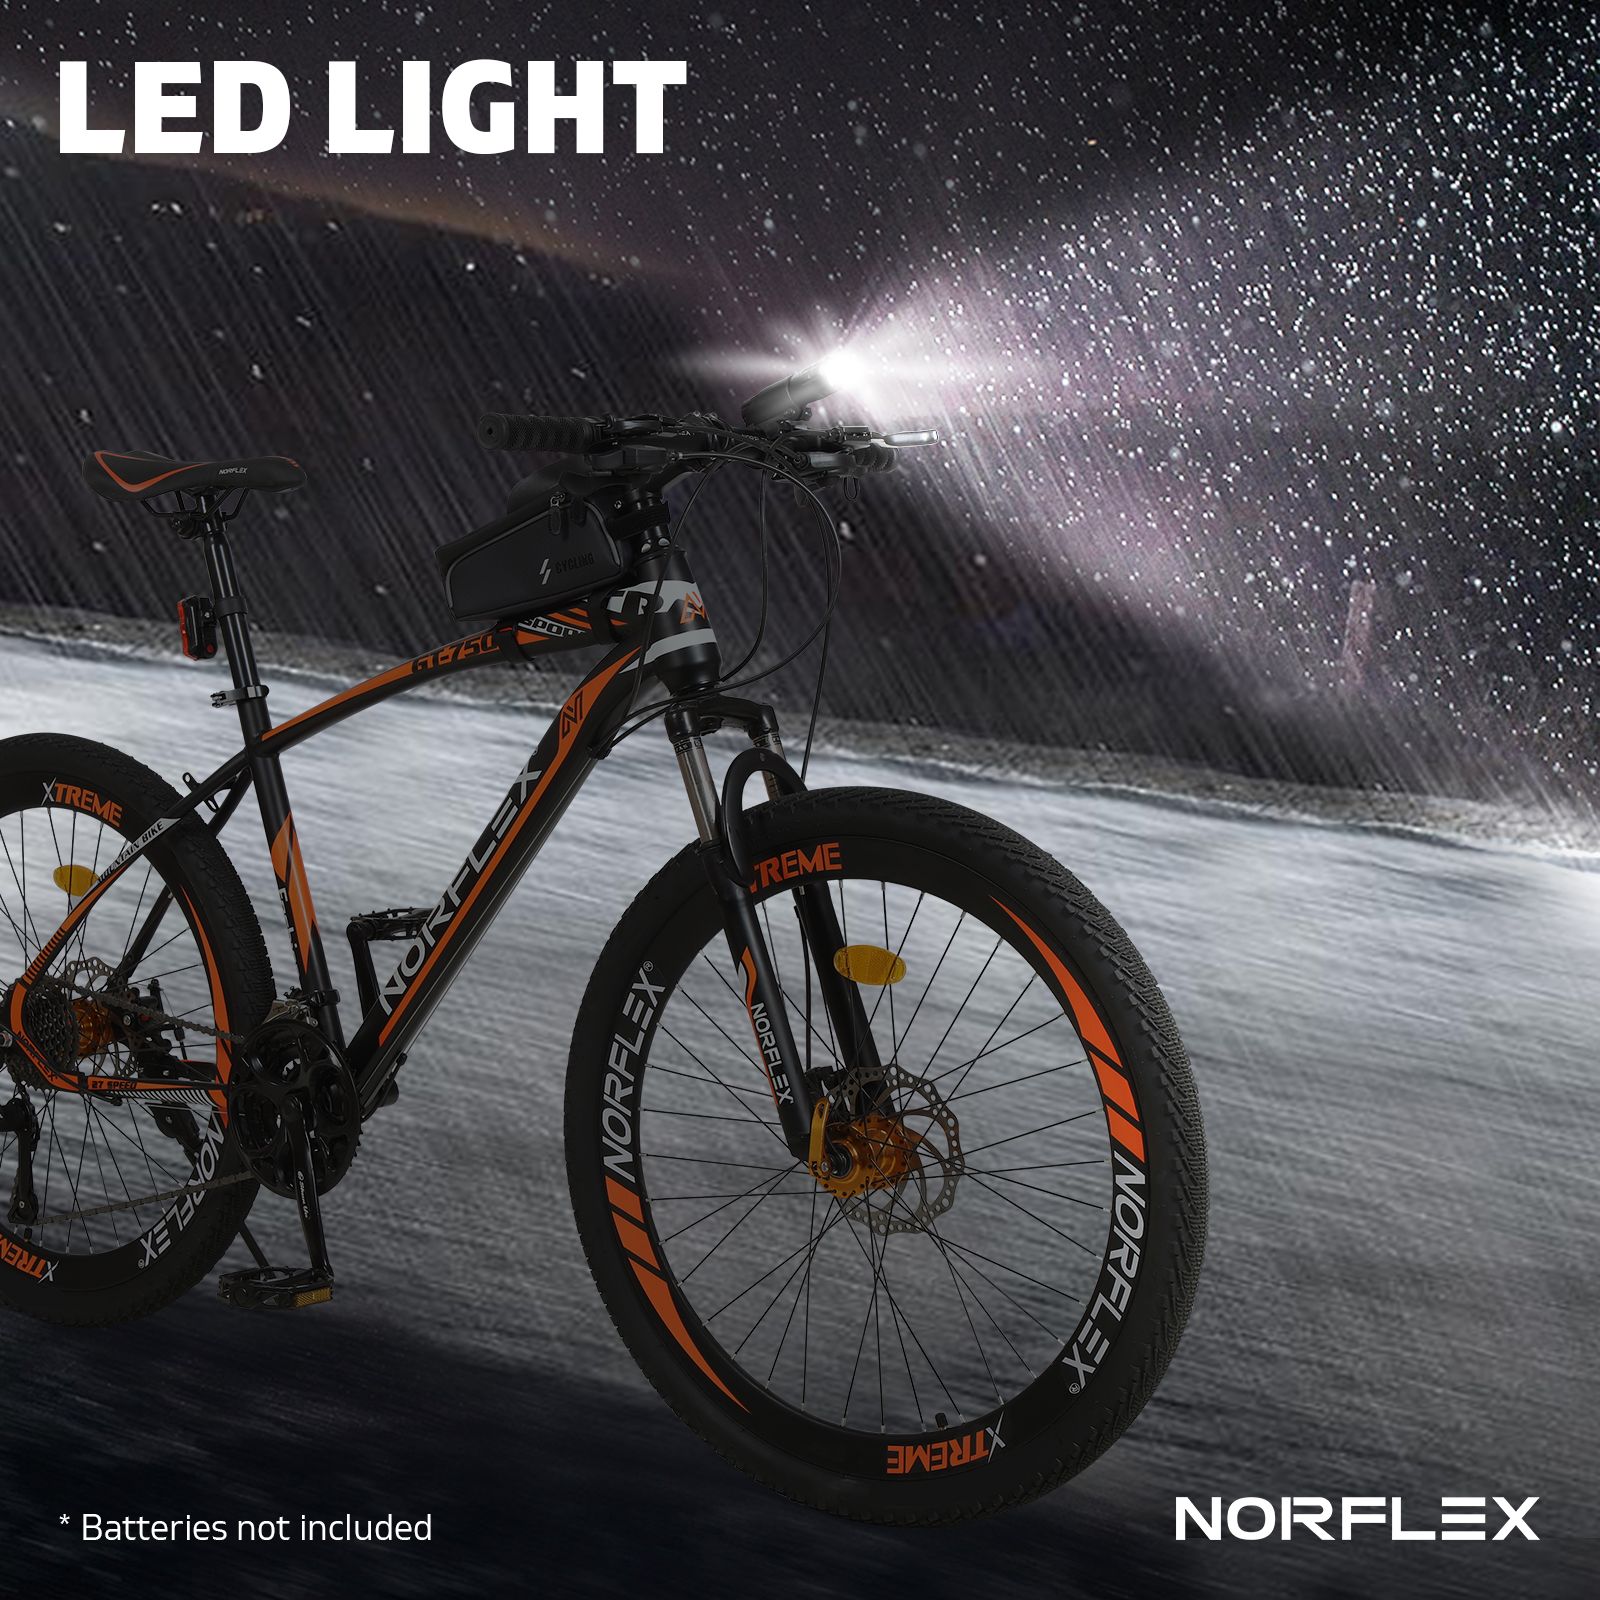 Norflex 26" Suspensions Mountain Bike, 27 Speed Dual Disc Brakes 